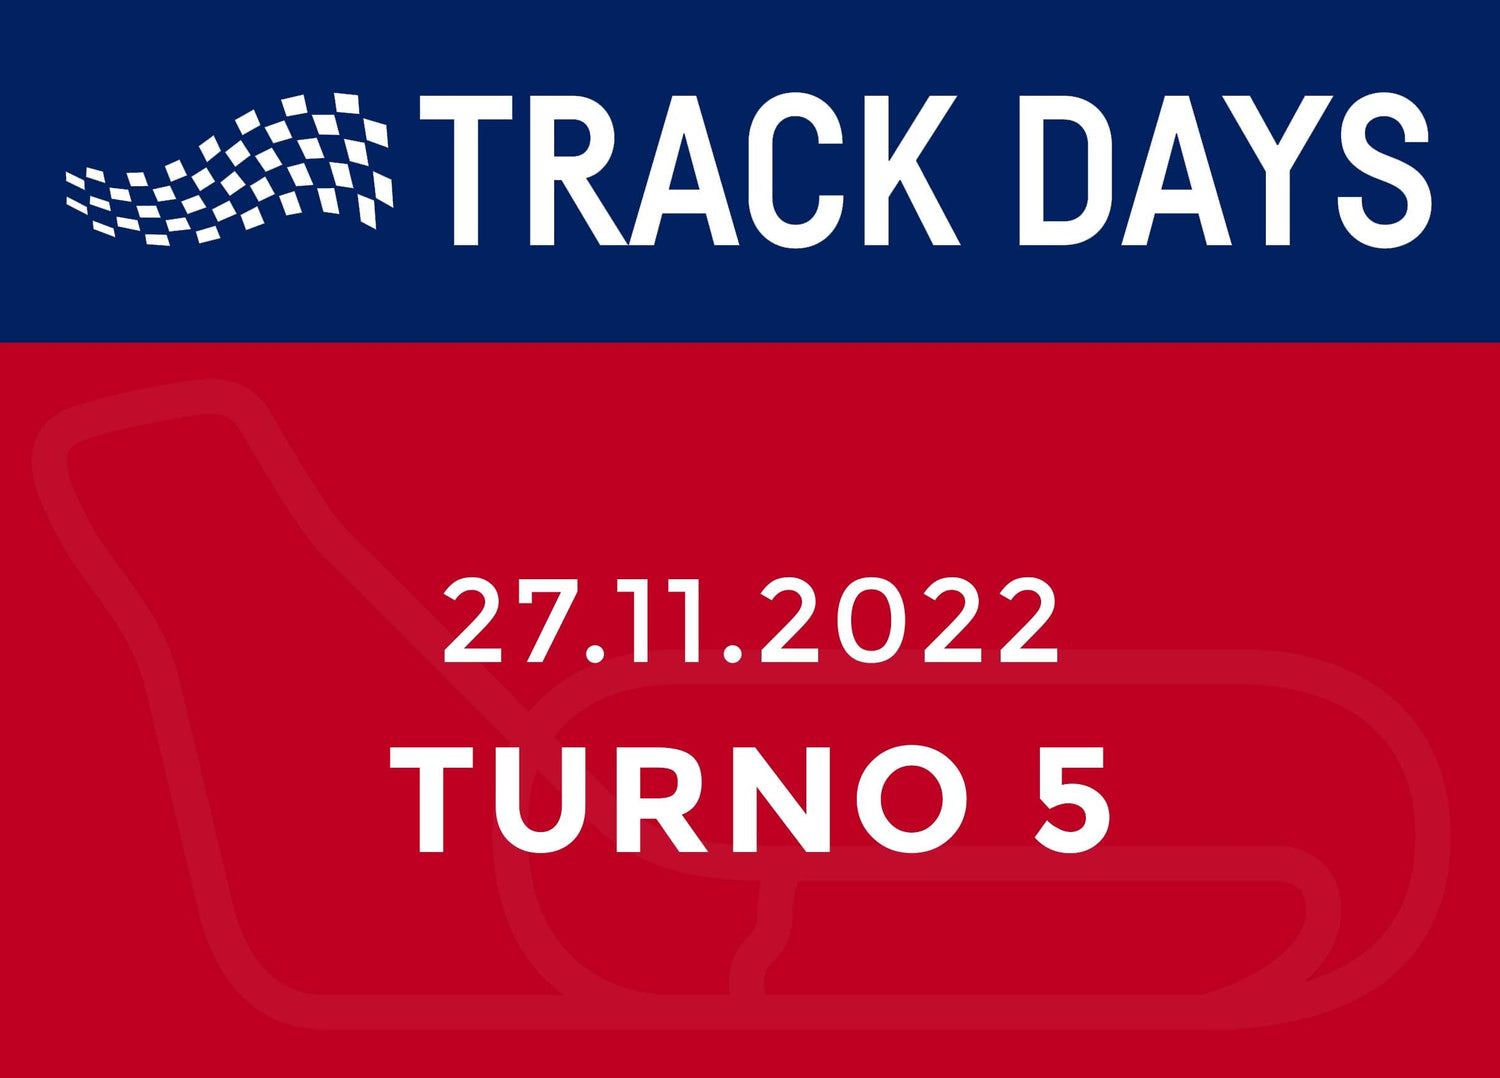 TRACK DAYS 27.11.22 TURNO 5